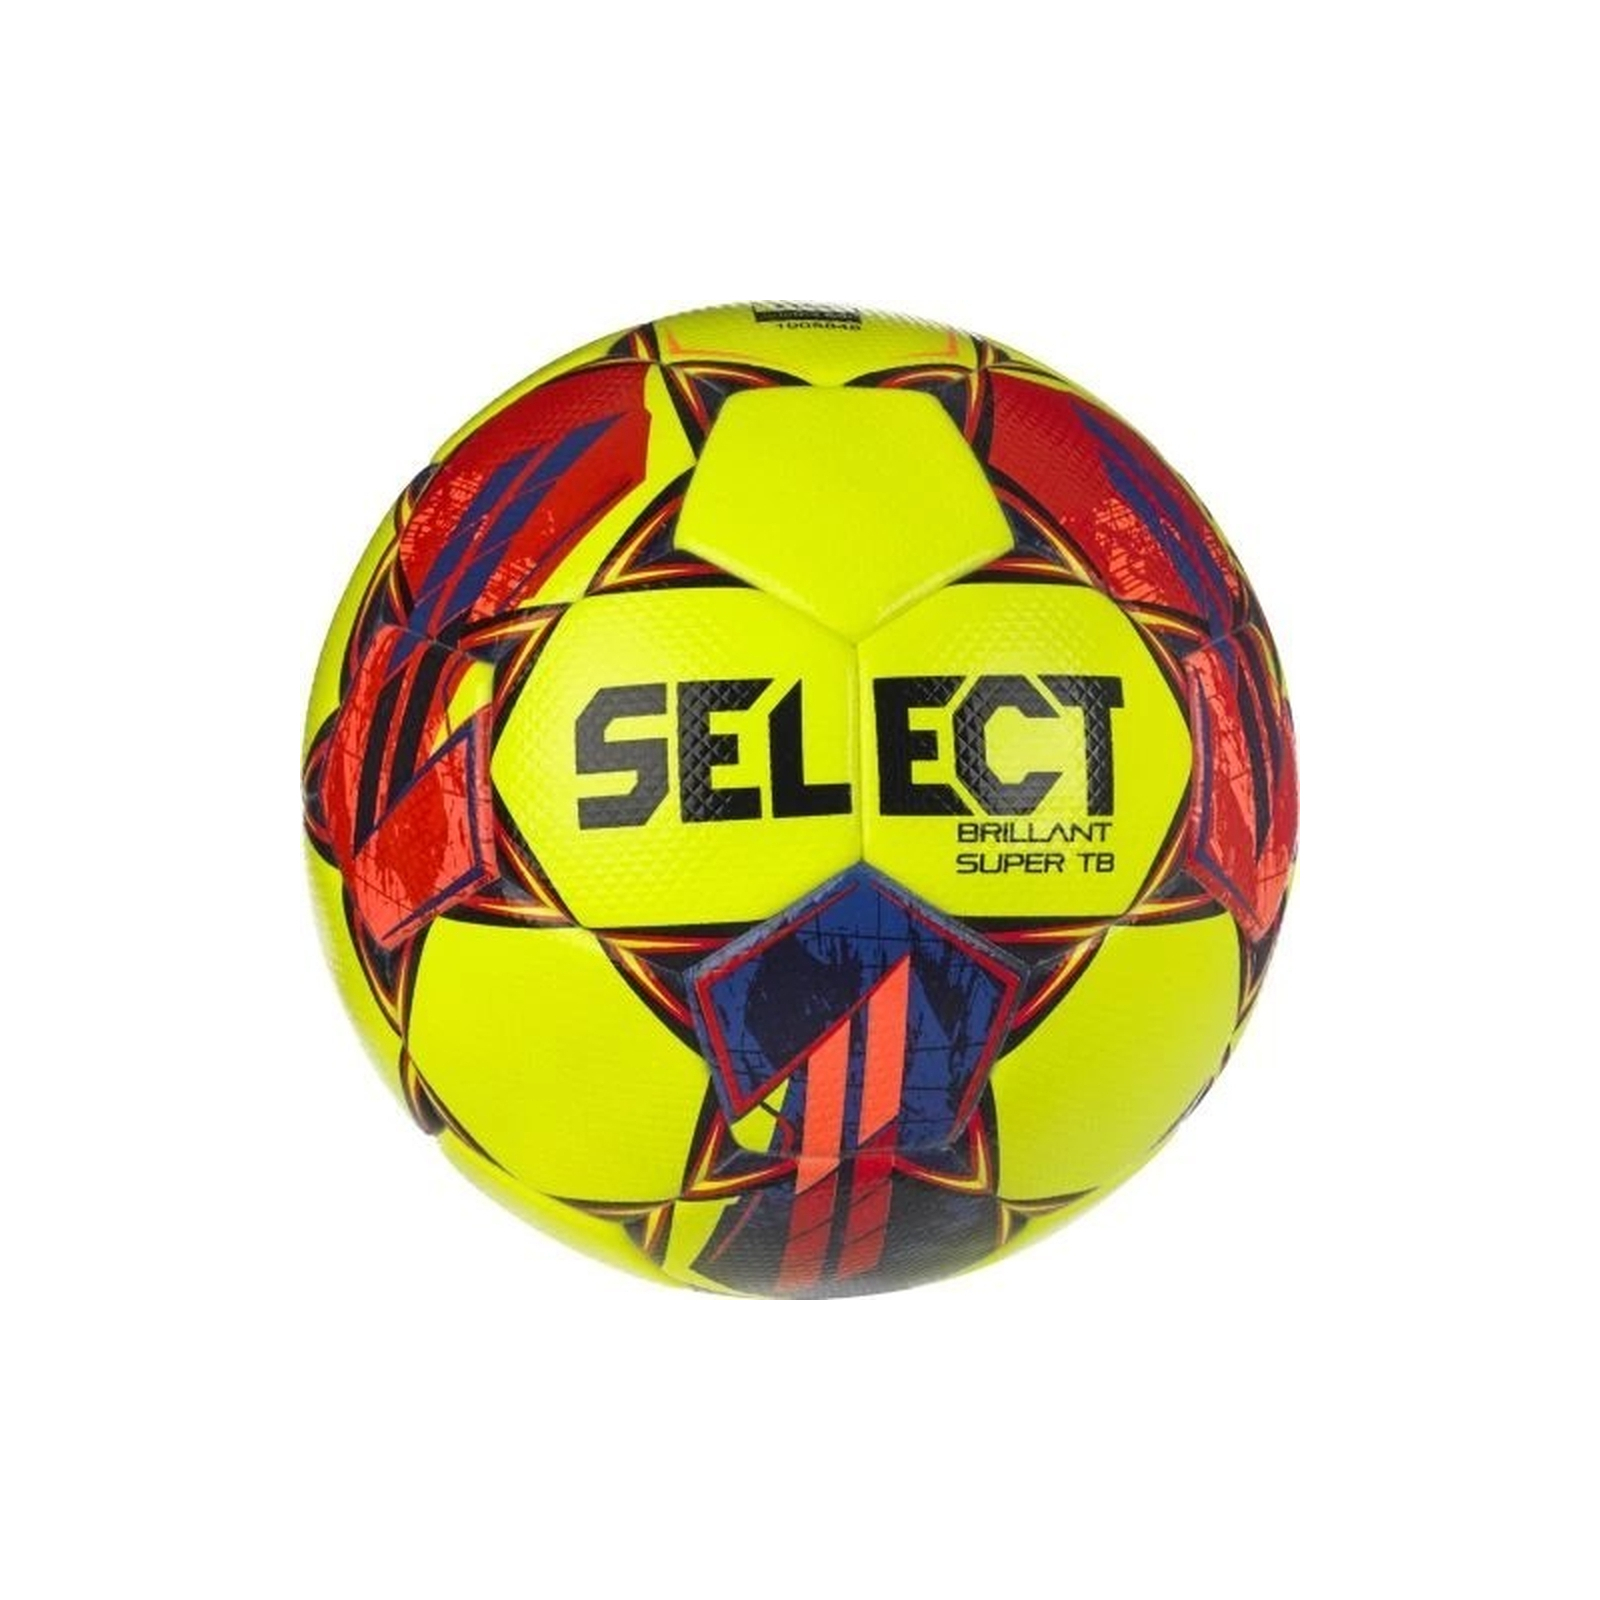 Мяч футбольный Select Brillant Super FIFA TB v23 жовтий, червоний Уні 5 (5703543317028)